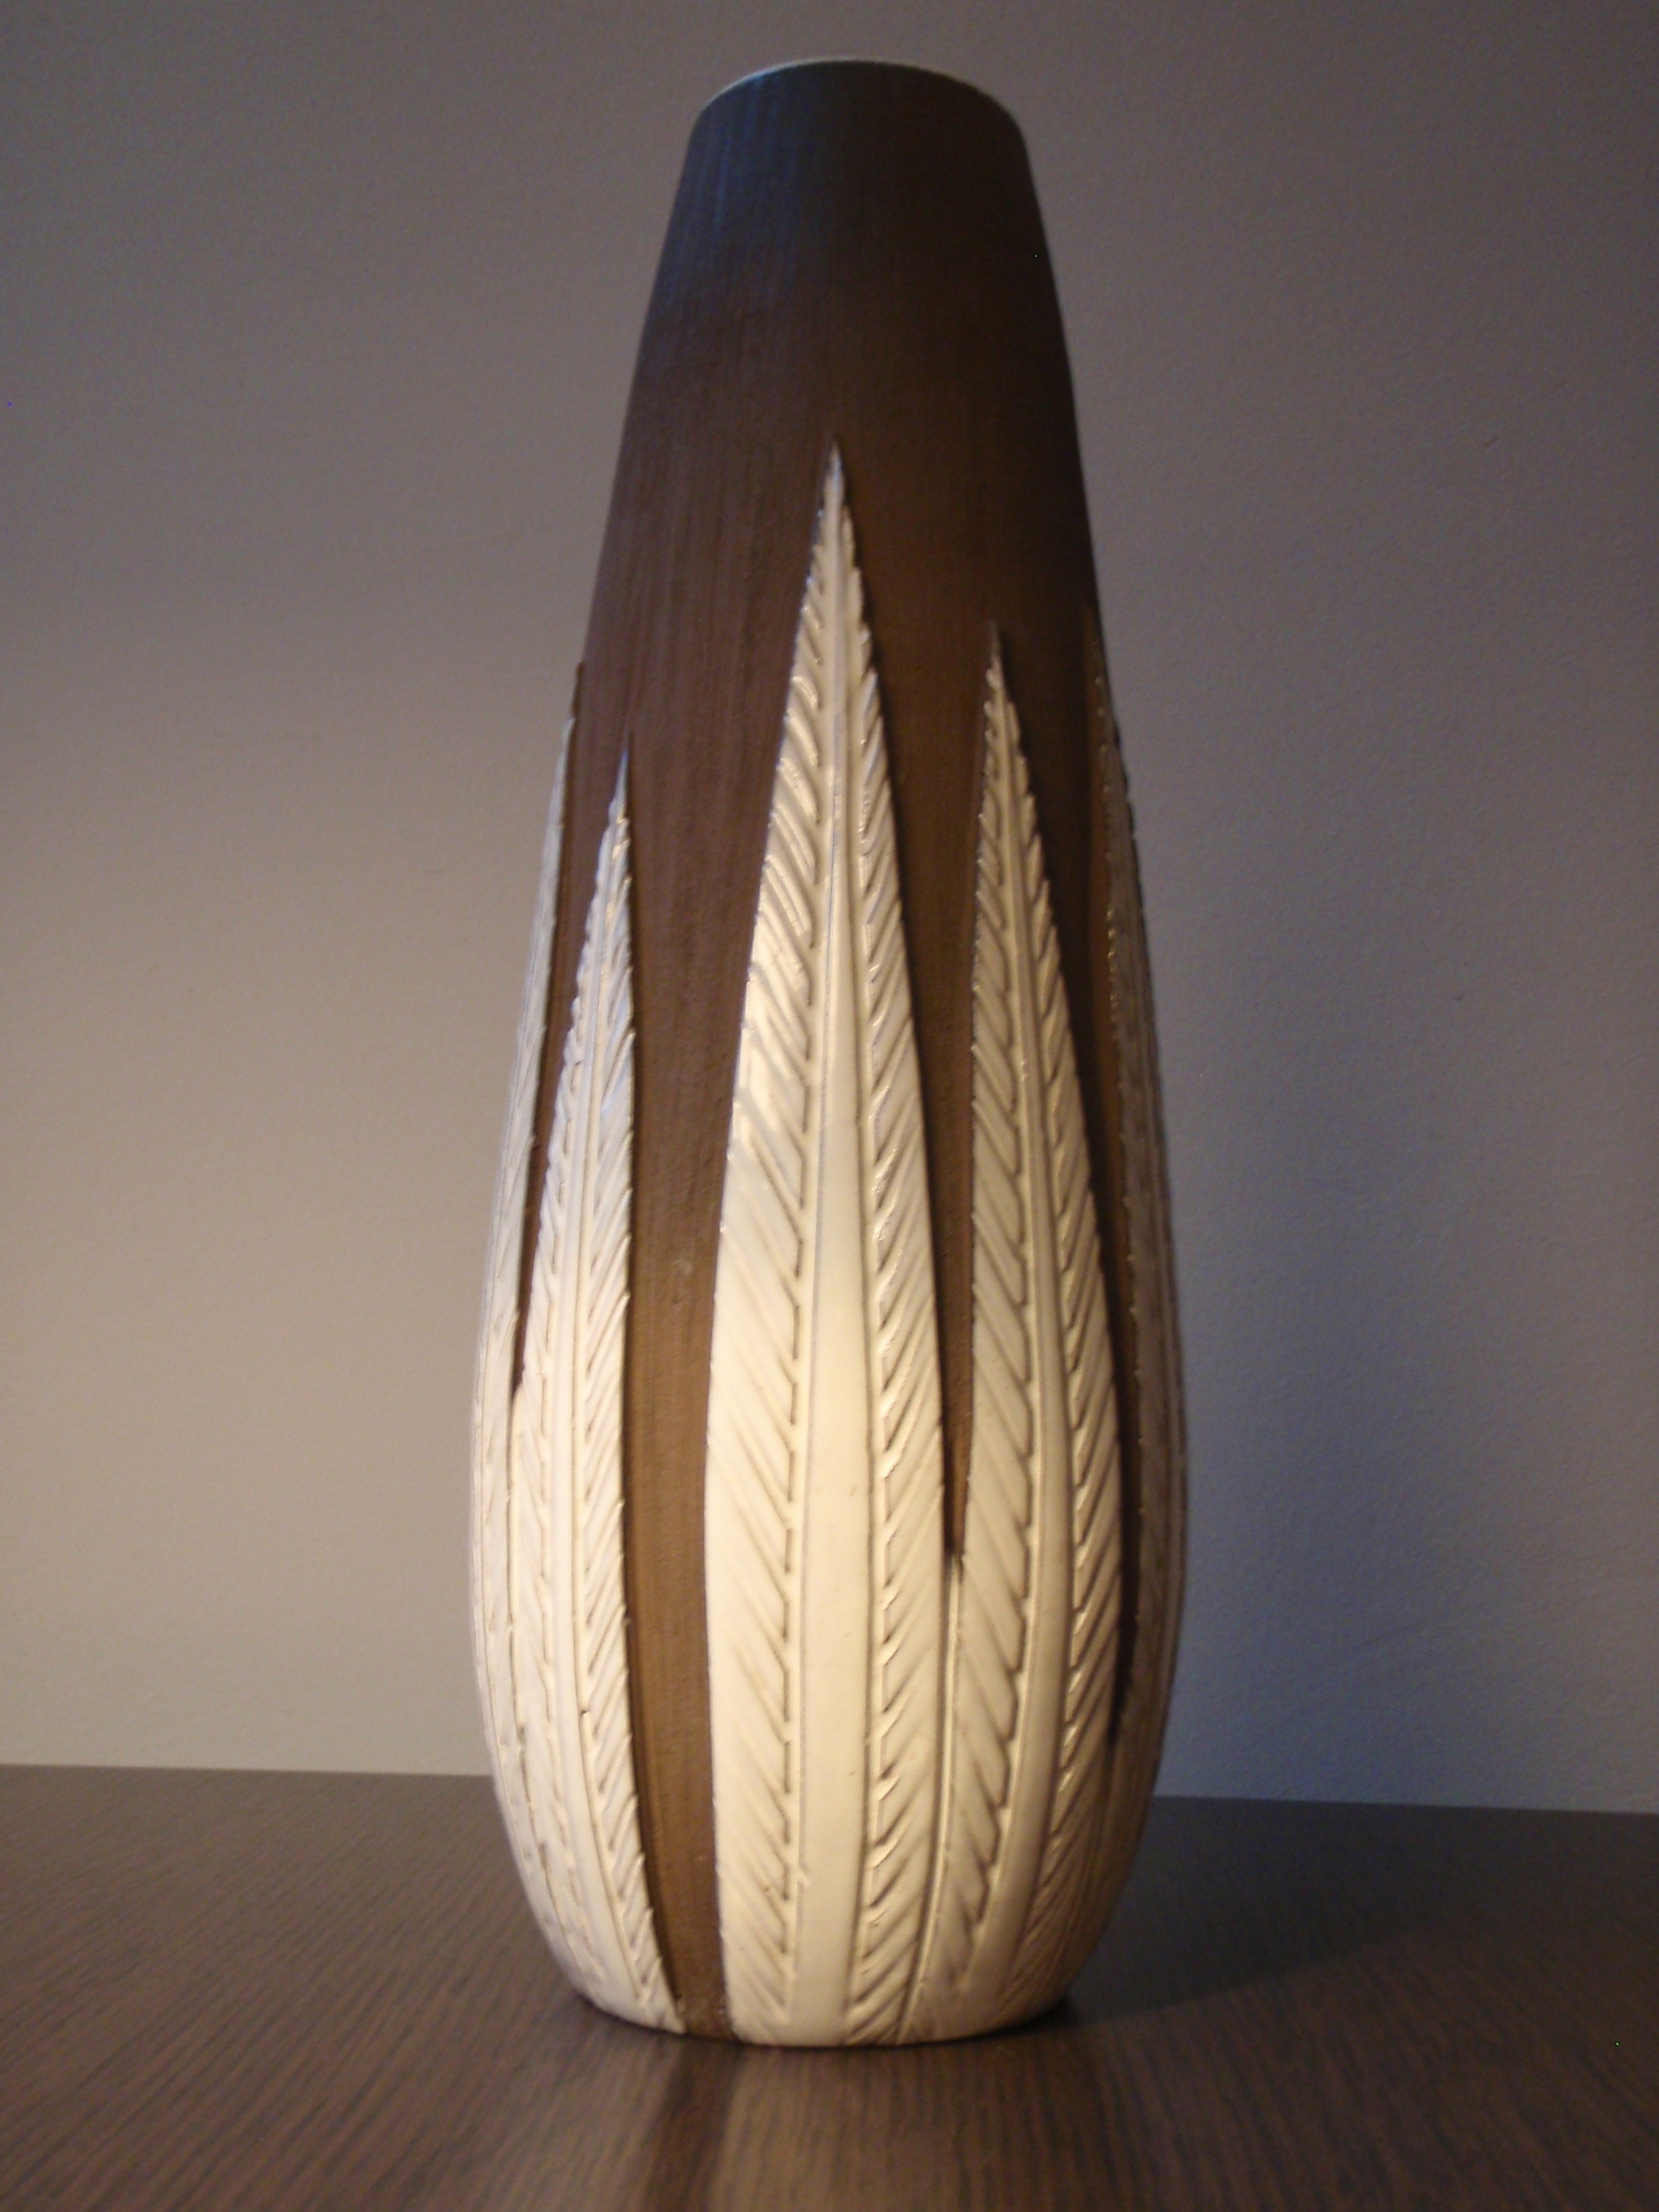 Paprika Vase by Anna-LisaThomson for Upsala-Ekeby